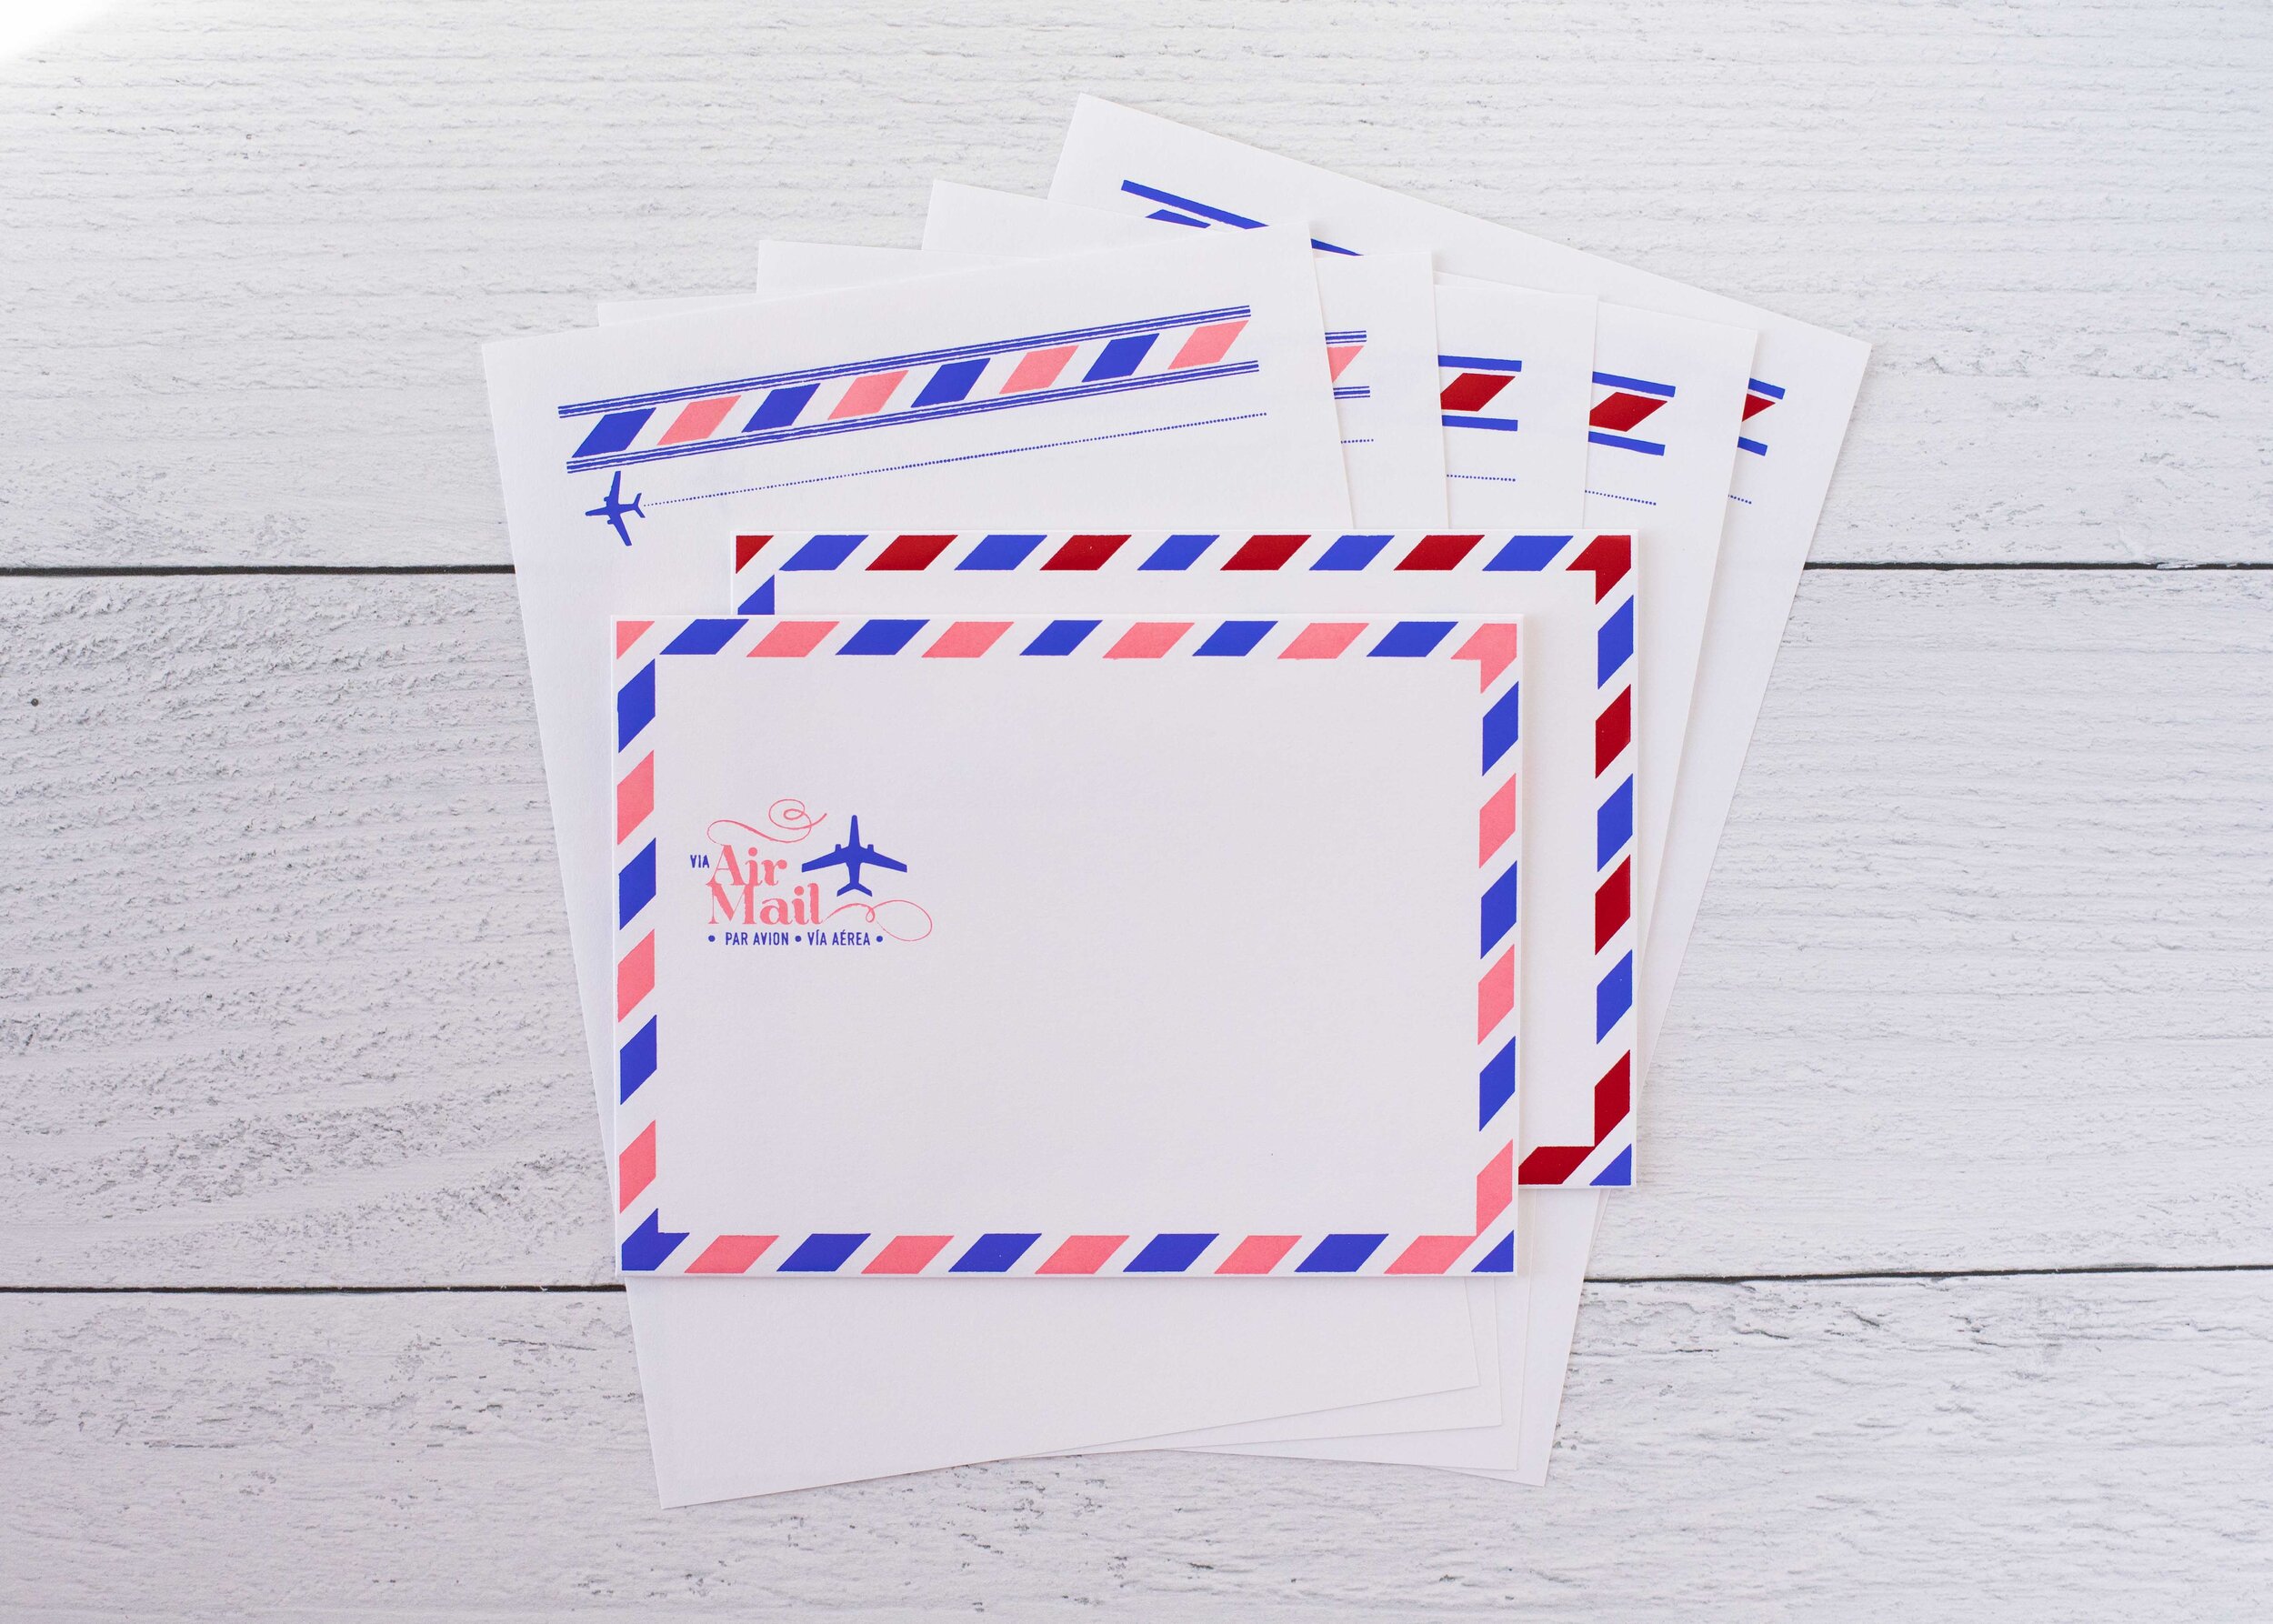 Par Avion Air Mail Letters Stamps Cotton Duck from Japan - So Cute!! -  Beautiful Textiles